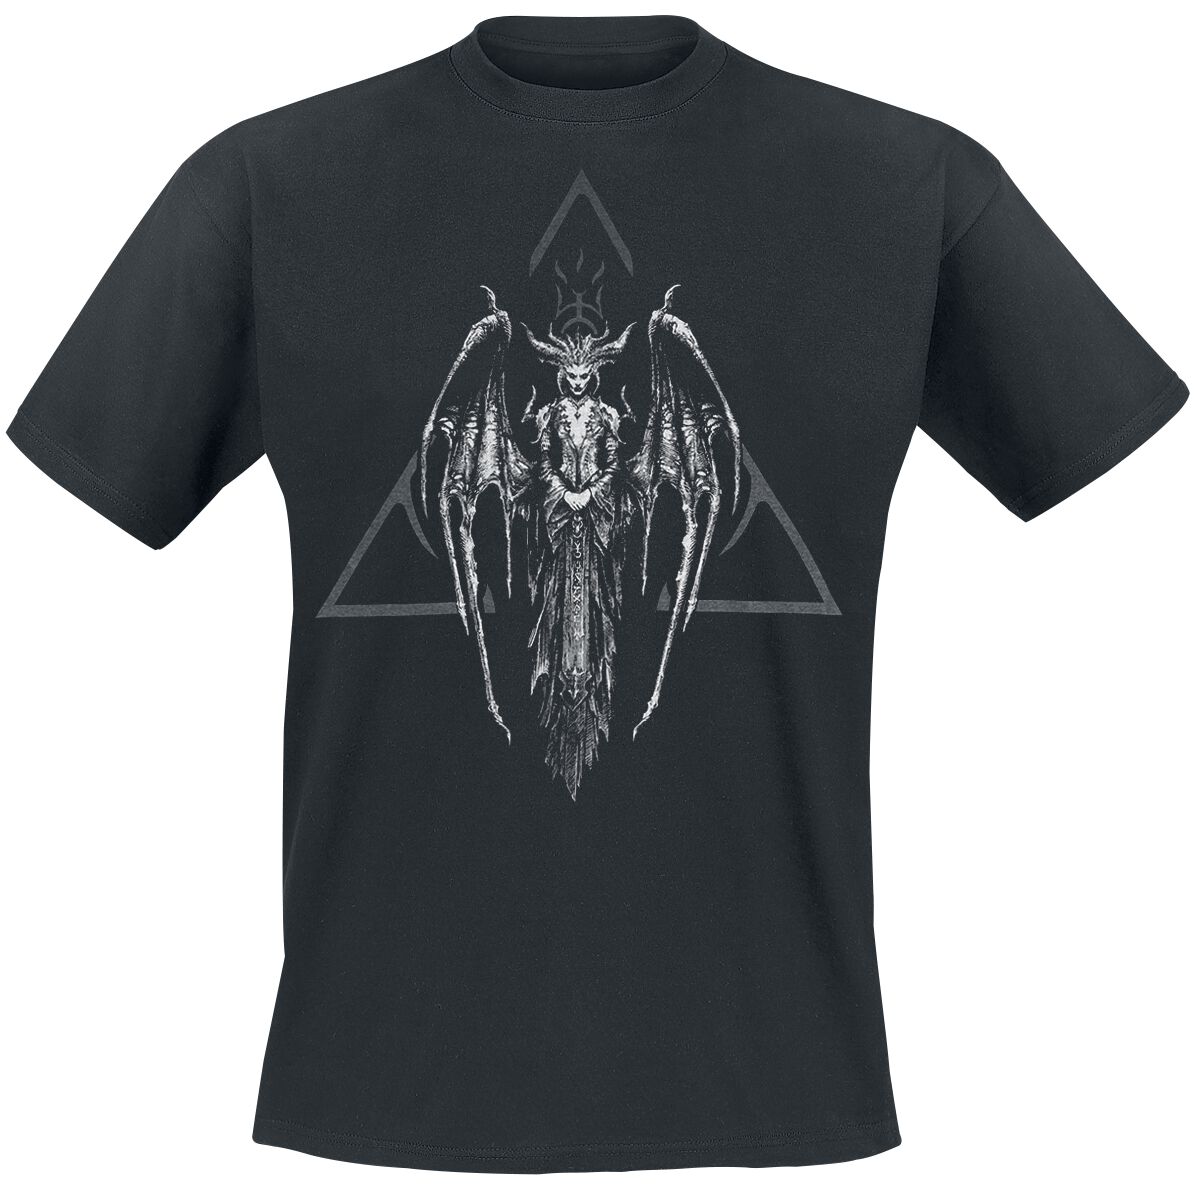 Diablo 4 - From Darkness T-Shirt black